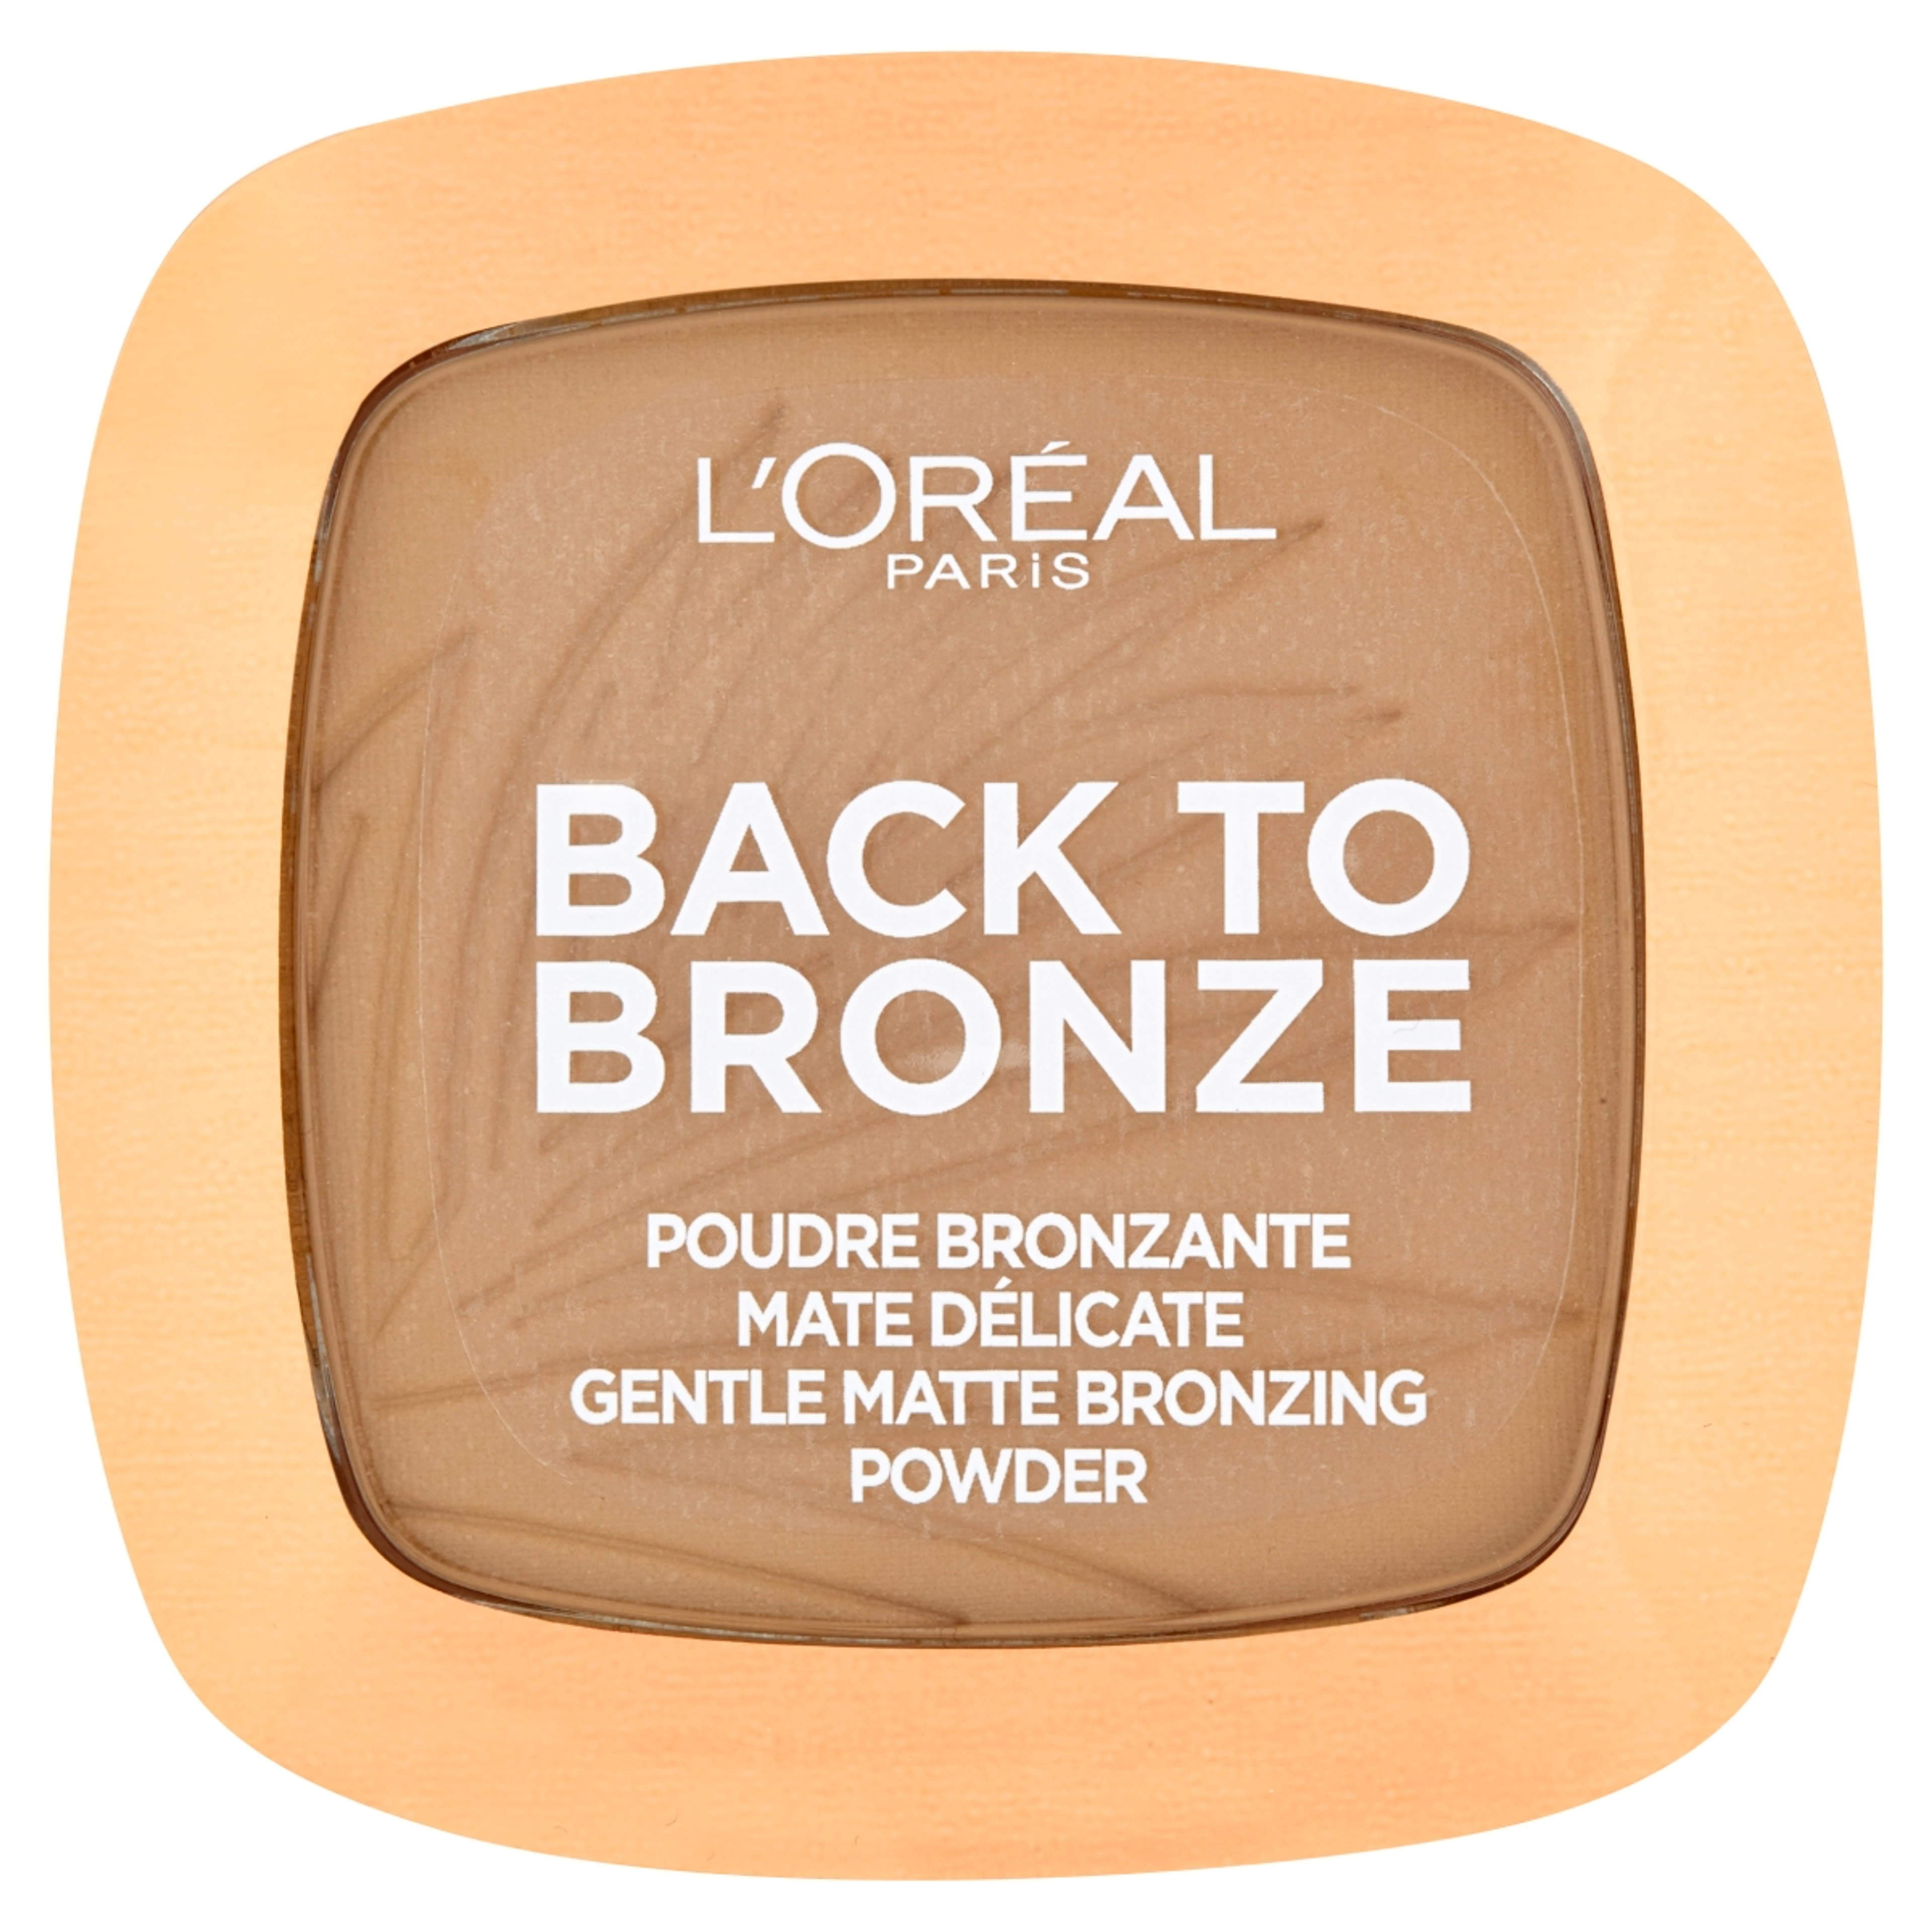 L'Oréal Paris Back To Bronze bronzosító  - 1 db